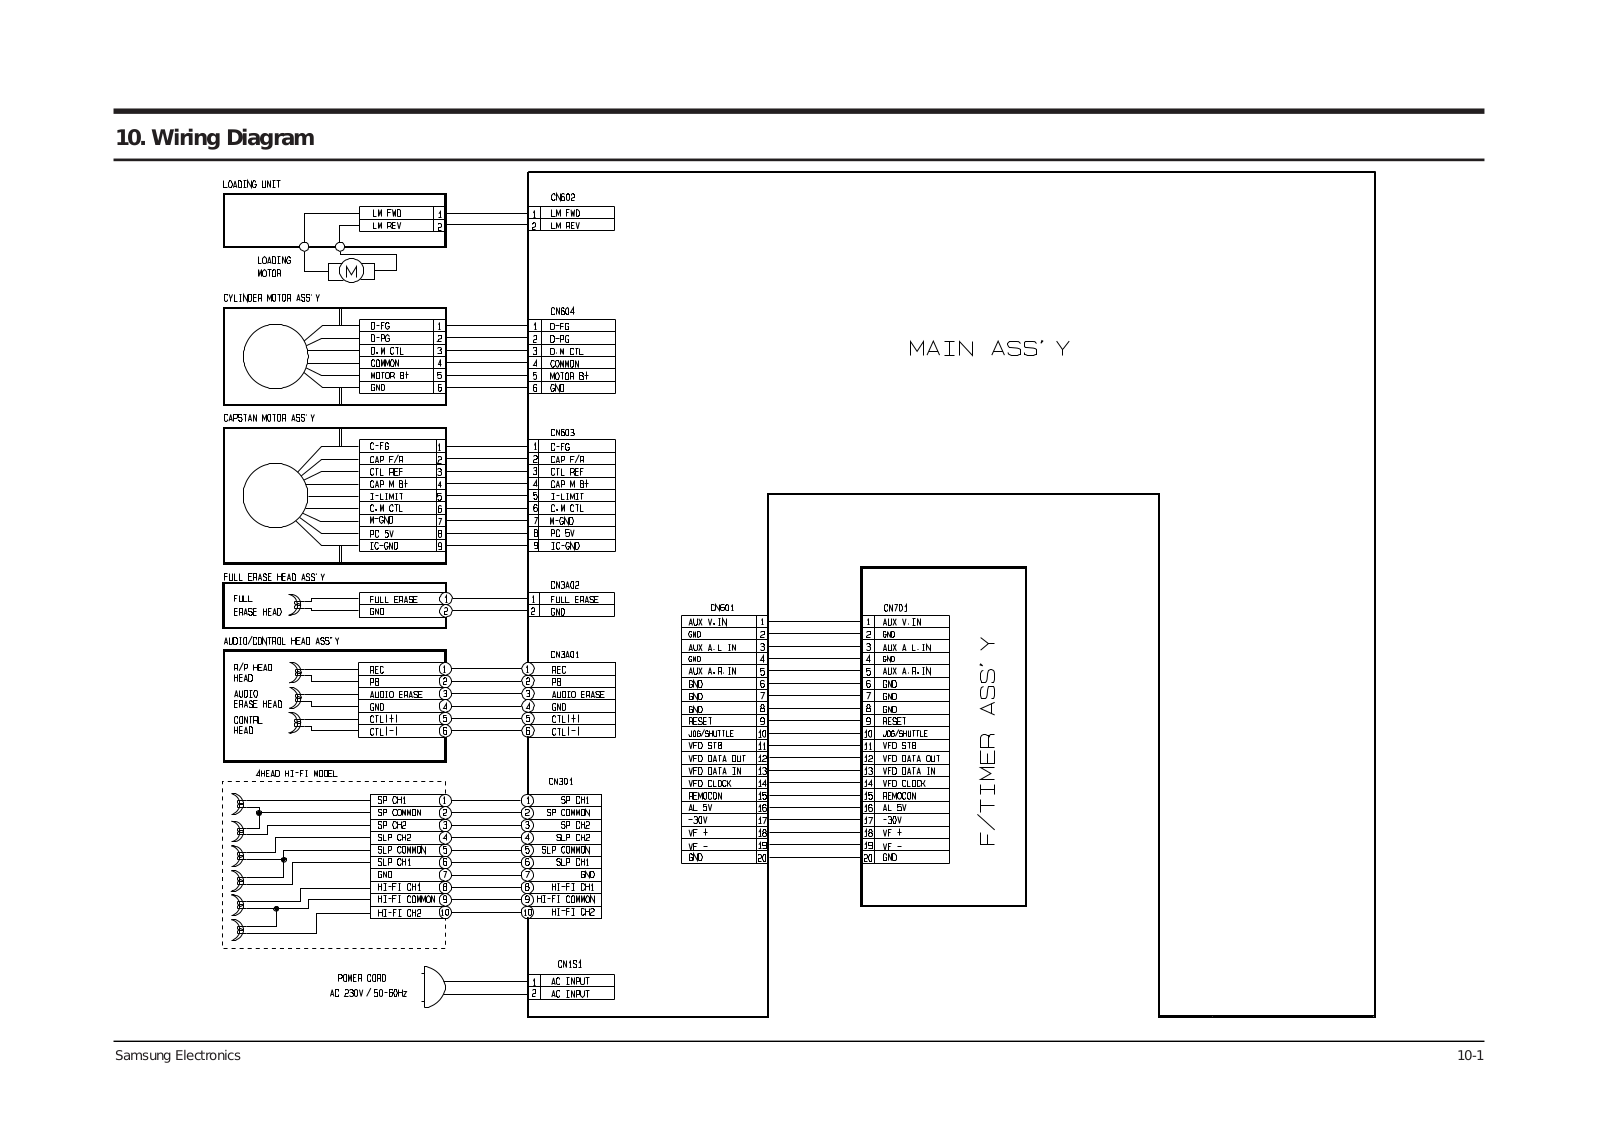 Samsung Svr-600, sv-605G, SV-A120G-CIS Wiring Diagram